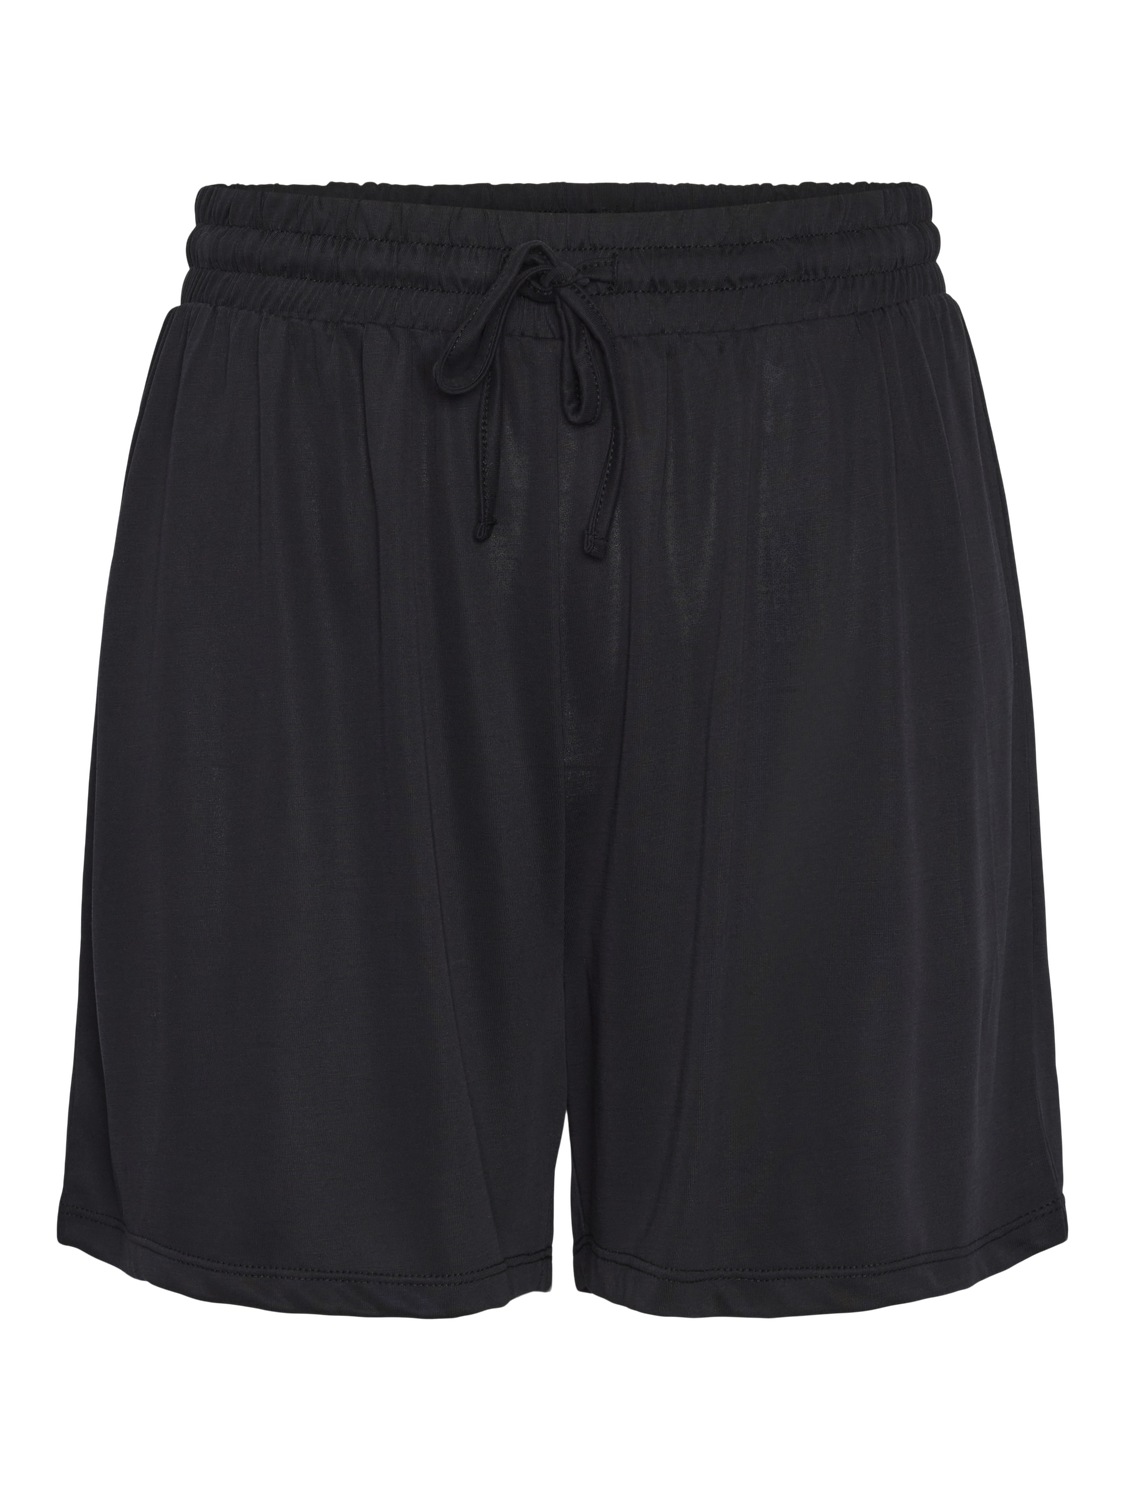 PCANORA Shorts - Black